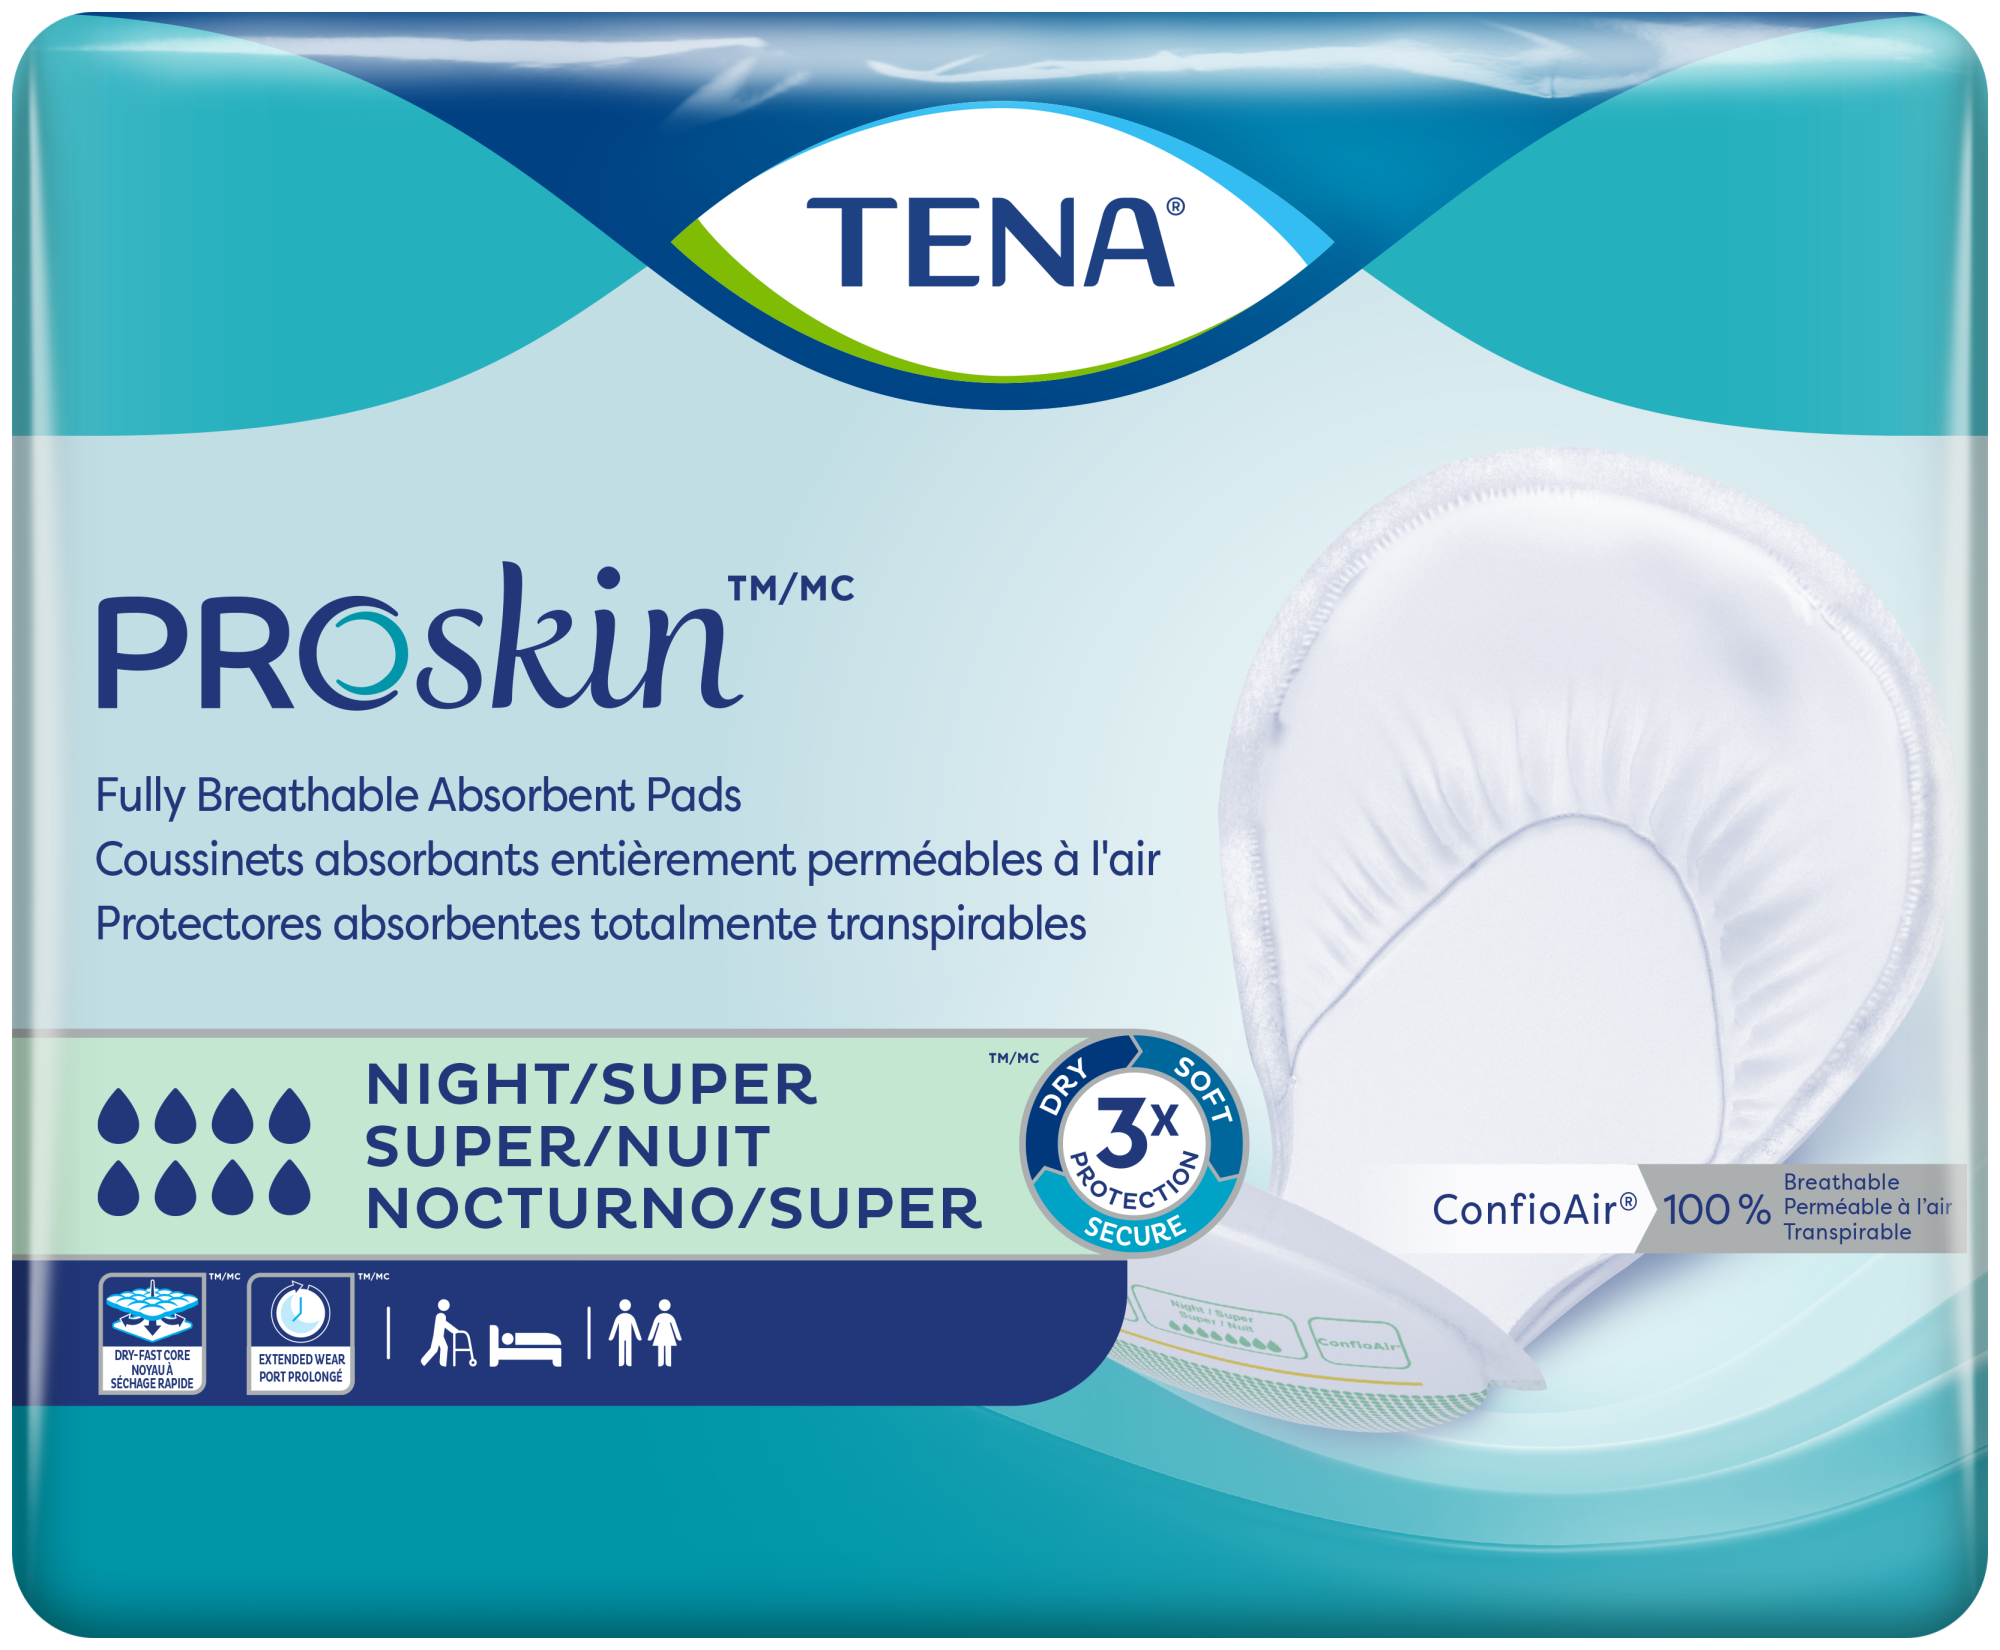 https://tena-images.essity.com/images-c5/707/400707/optimized-AzurePNG2K/tena-proskin-night-super-2x24-beauty-pack.png